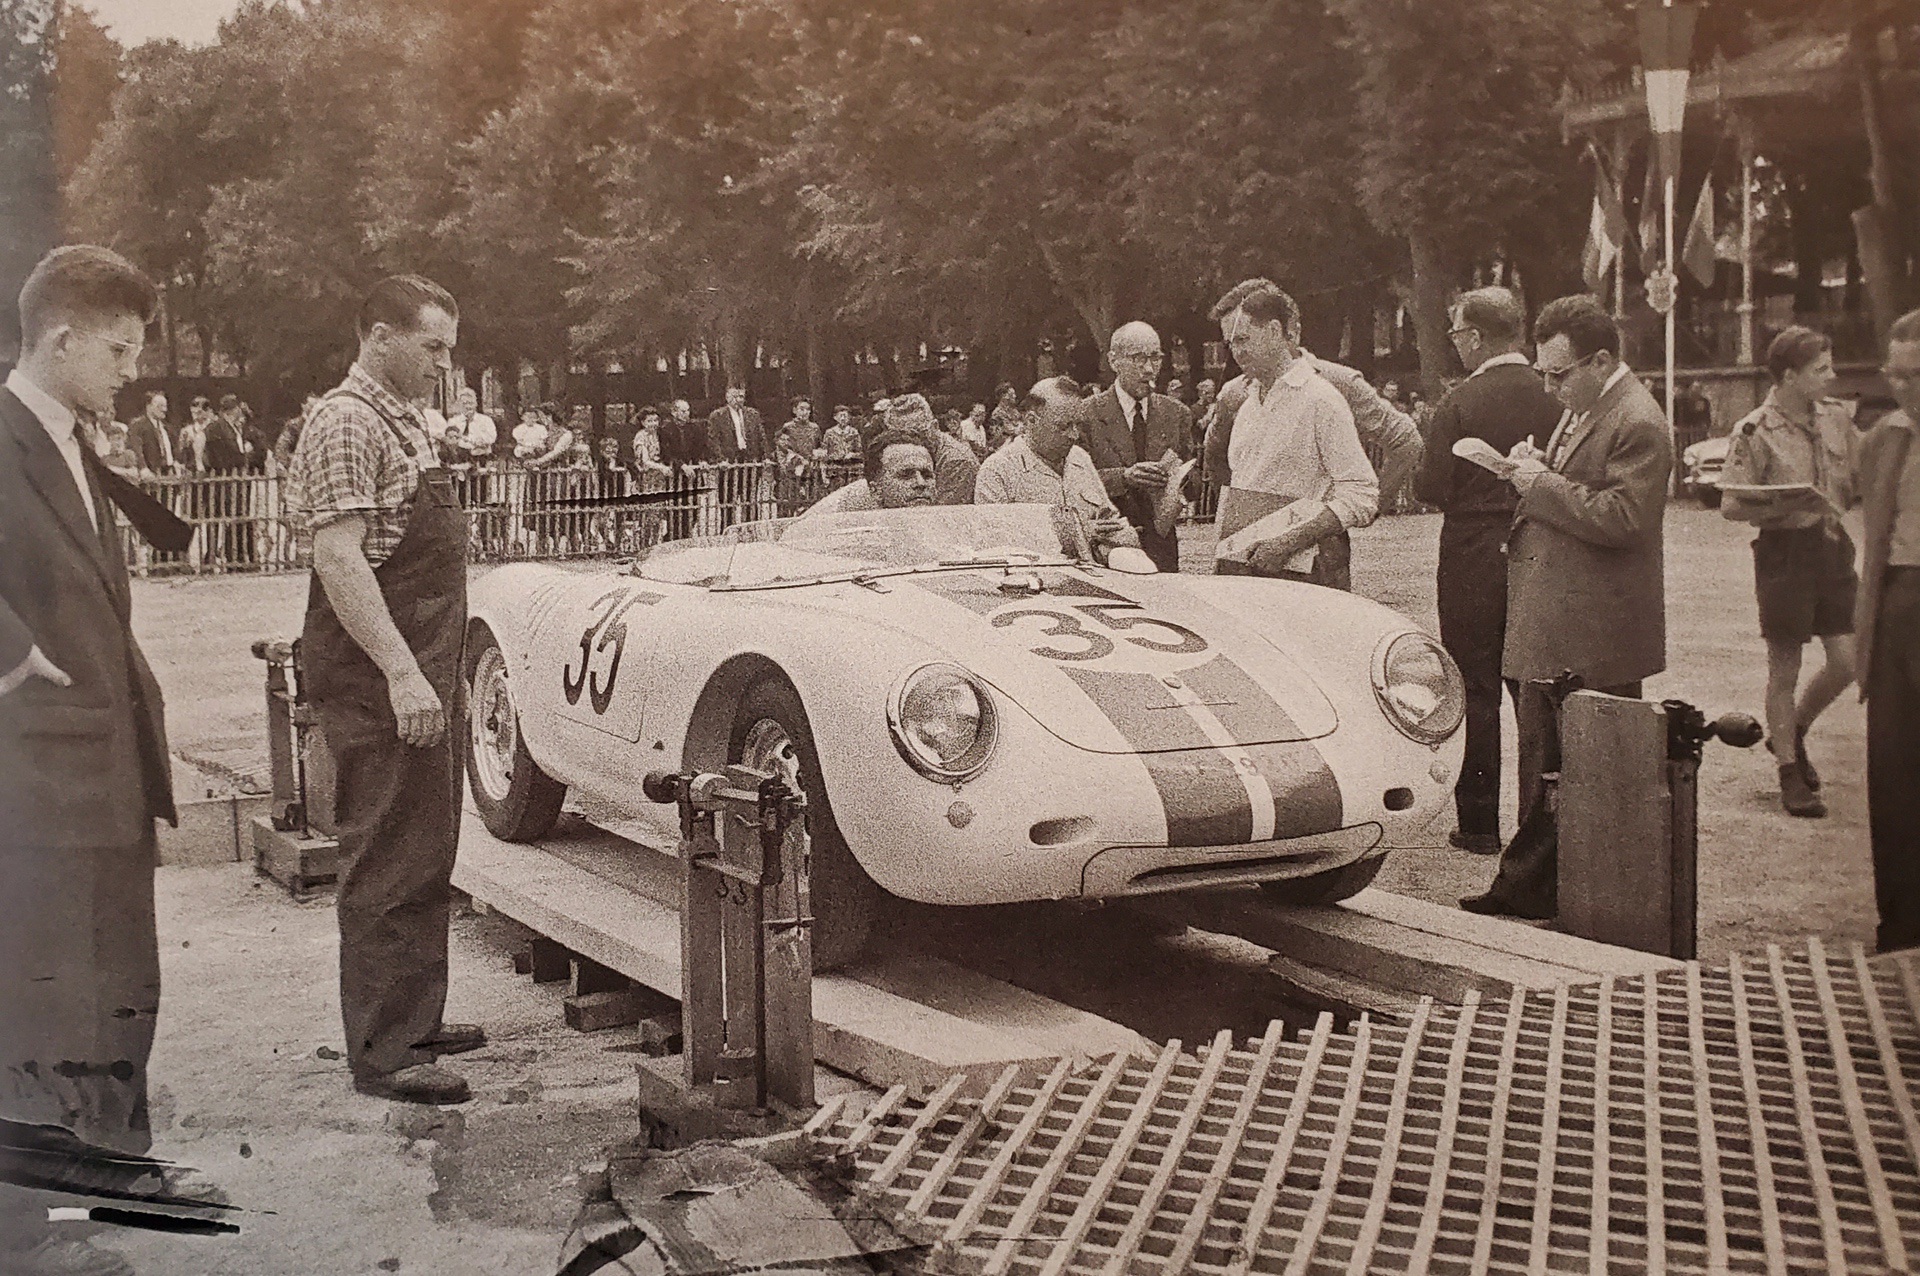 Old photo of Porsche 550 RS Spyder in scrutineering in 1957